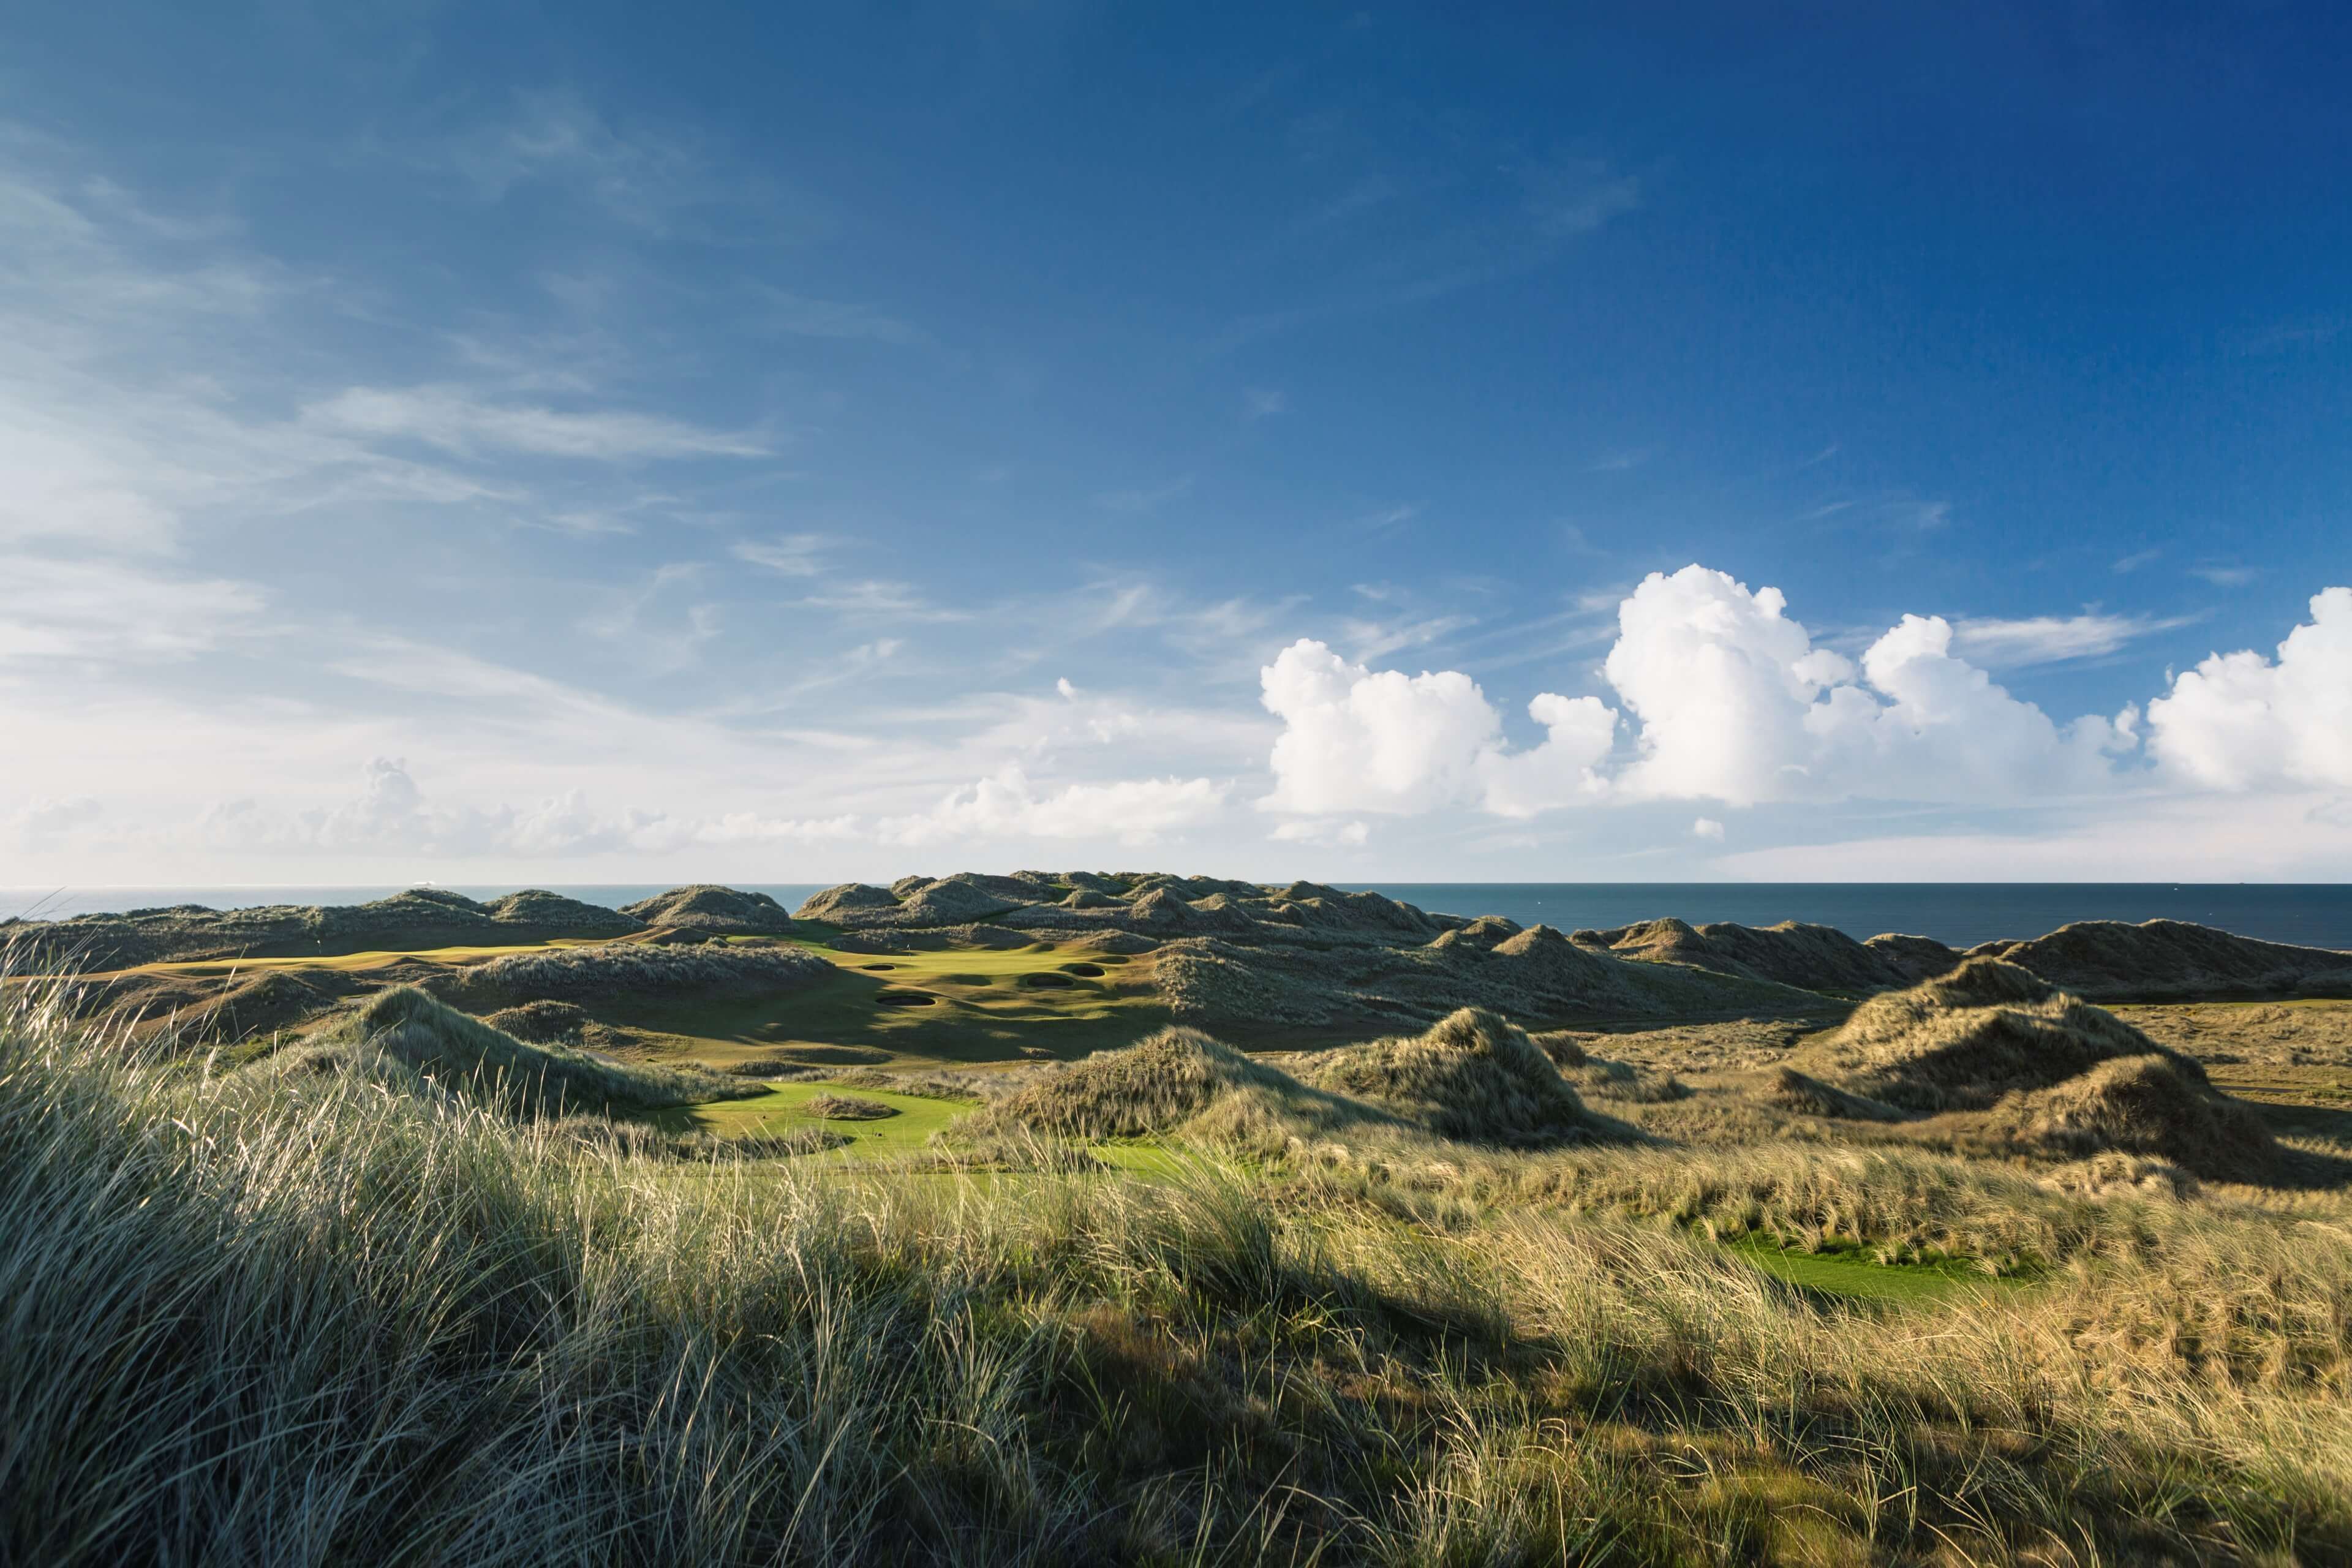 Trump International Golf Links, Scotland - Golf Course